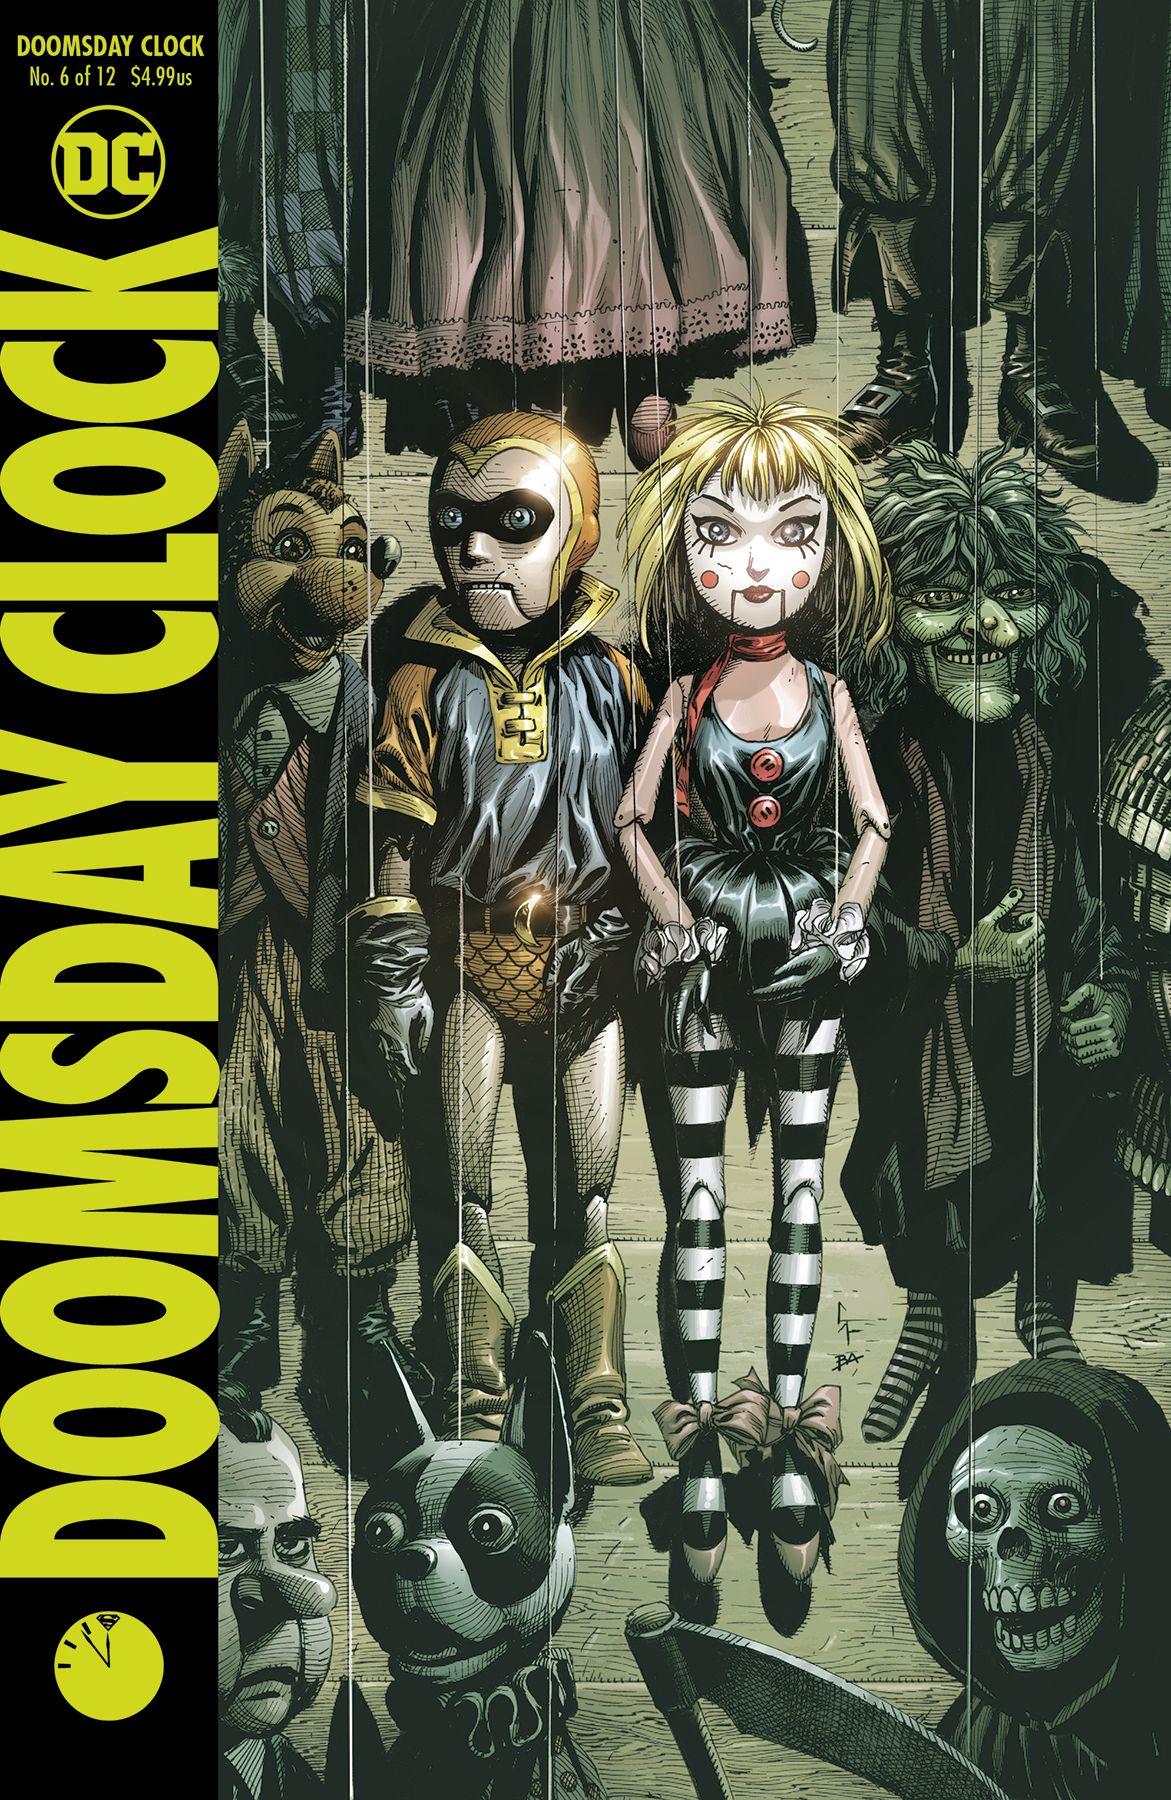 Doomsday Clock #6 Comic